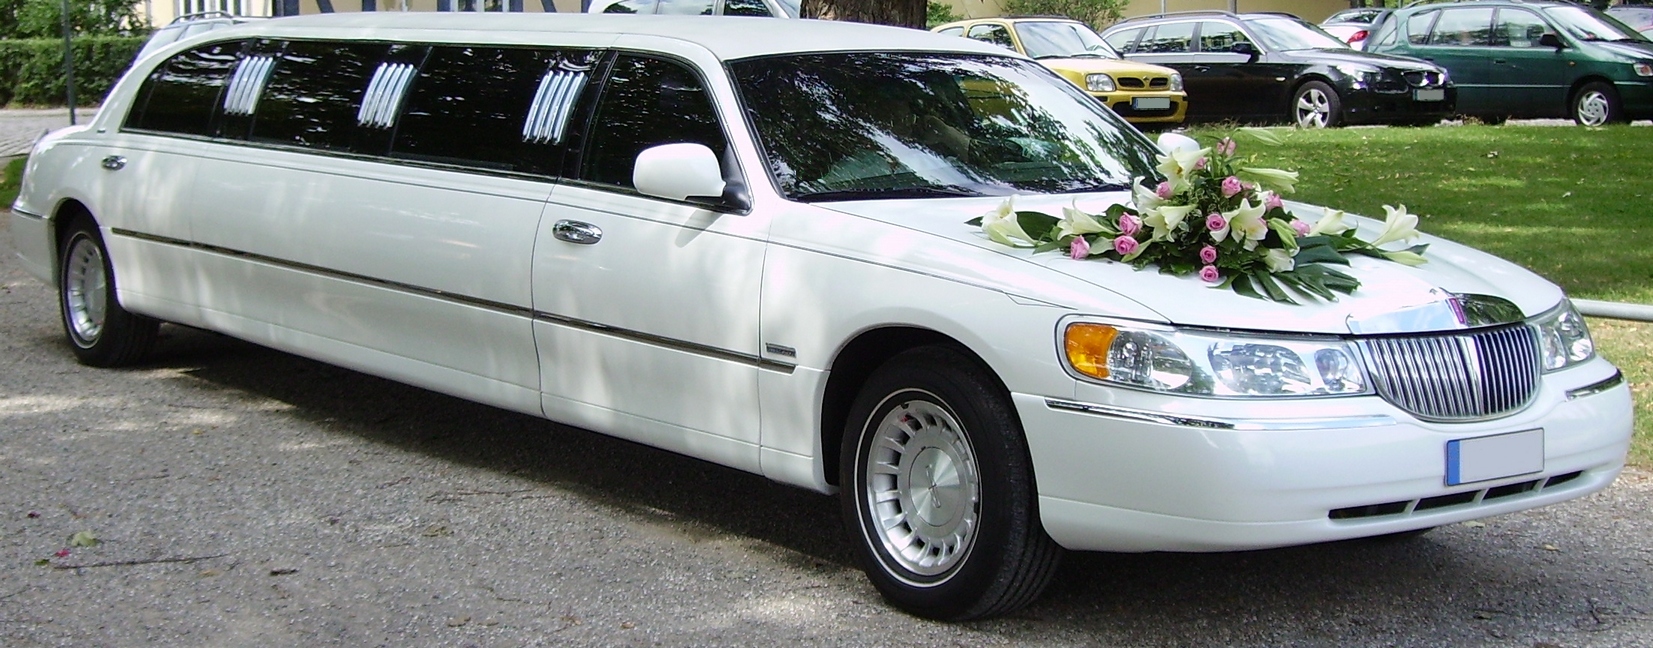 lincoln_town_car_limousine_wedding_car